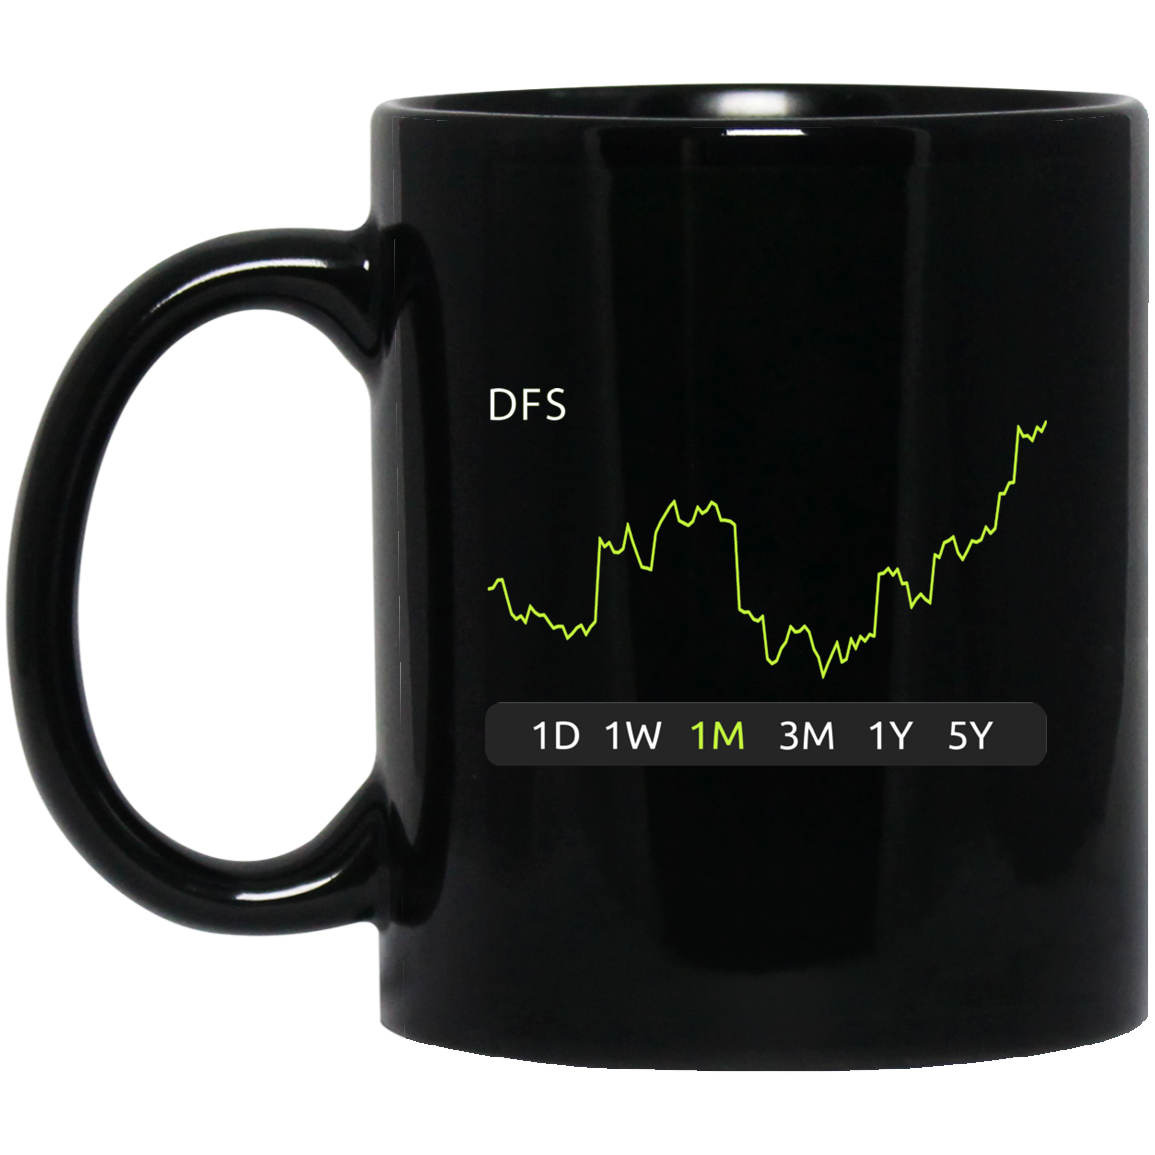 DFS Stock 1m Mug